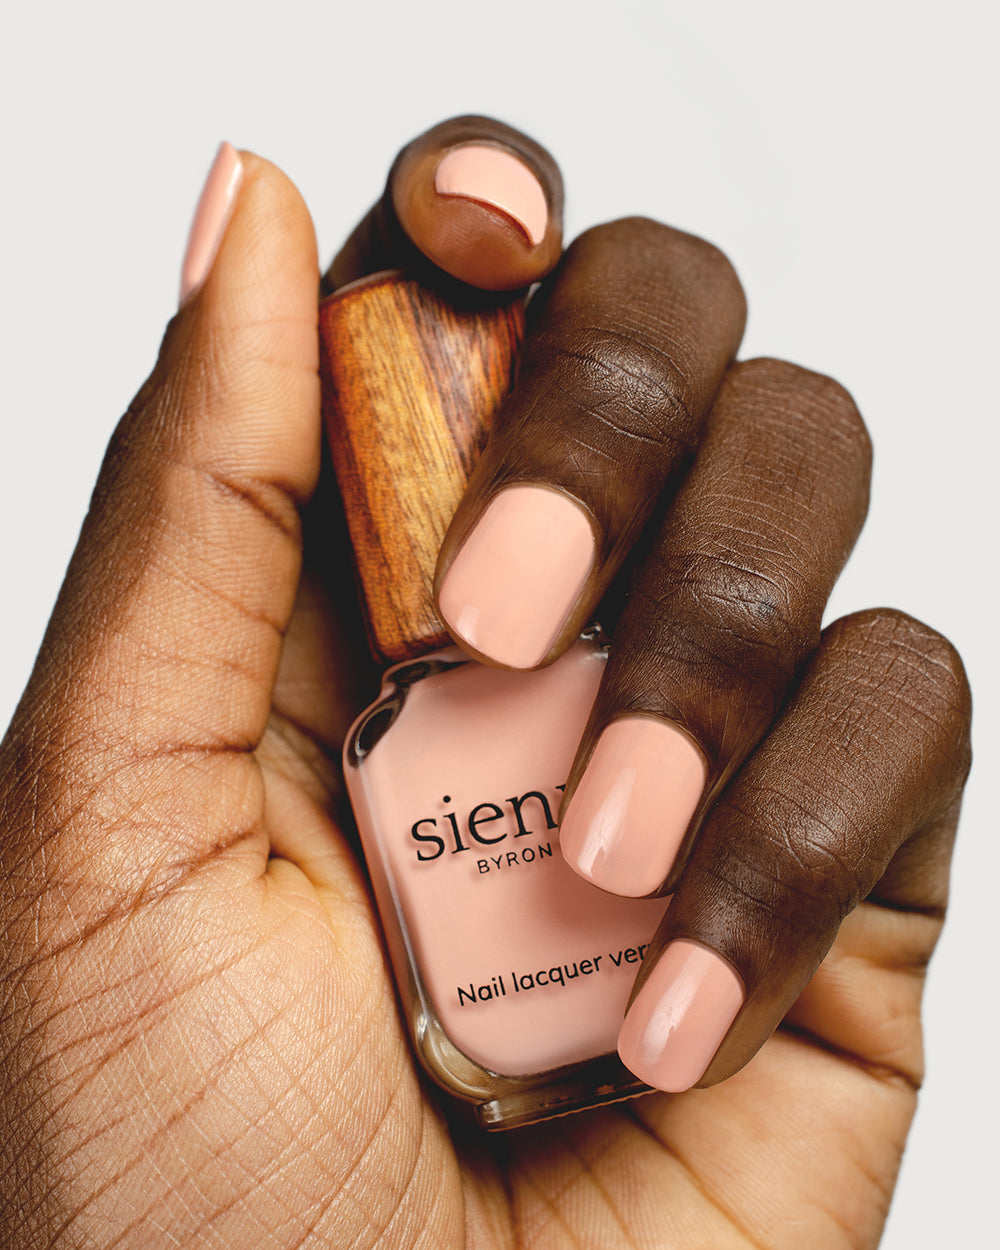 nude pink nail polish hand swatch on dark skin tone holding a sienna bottle